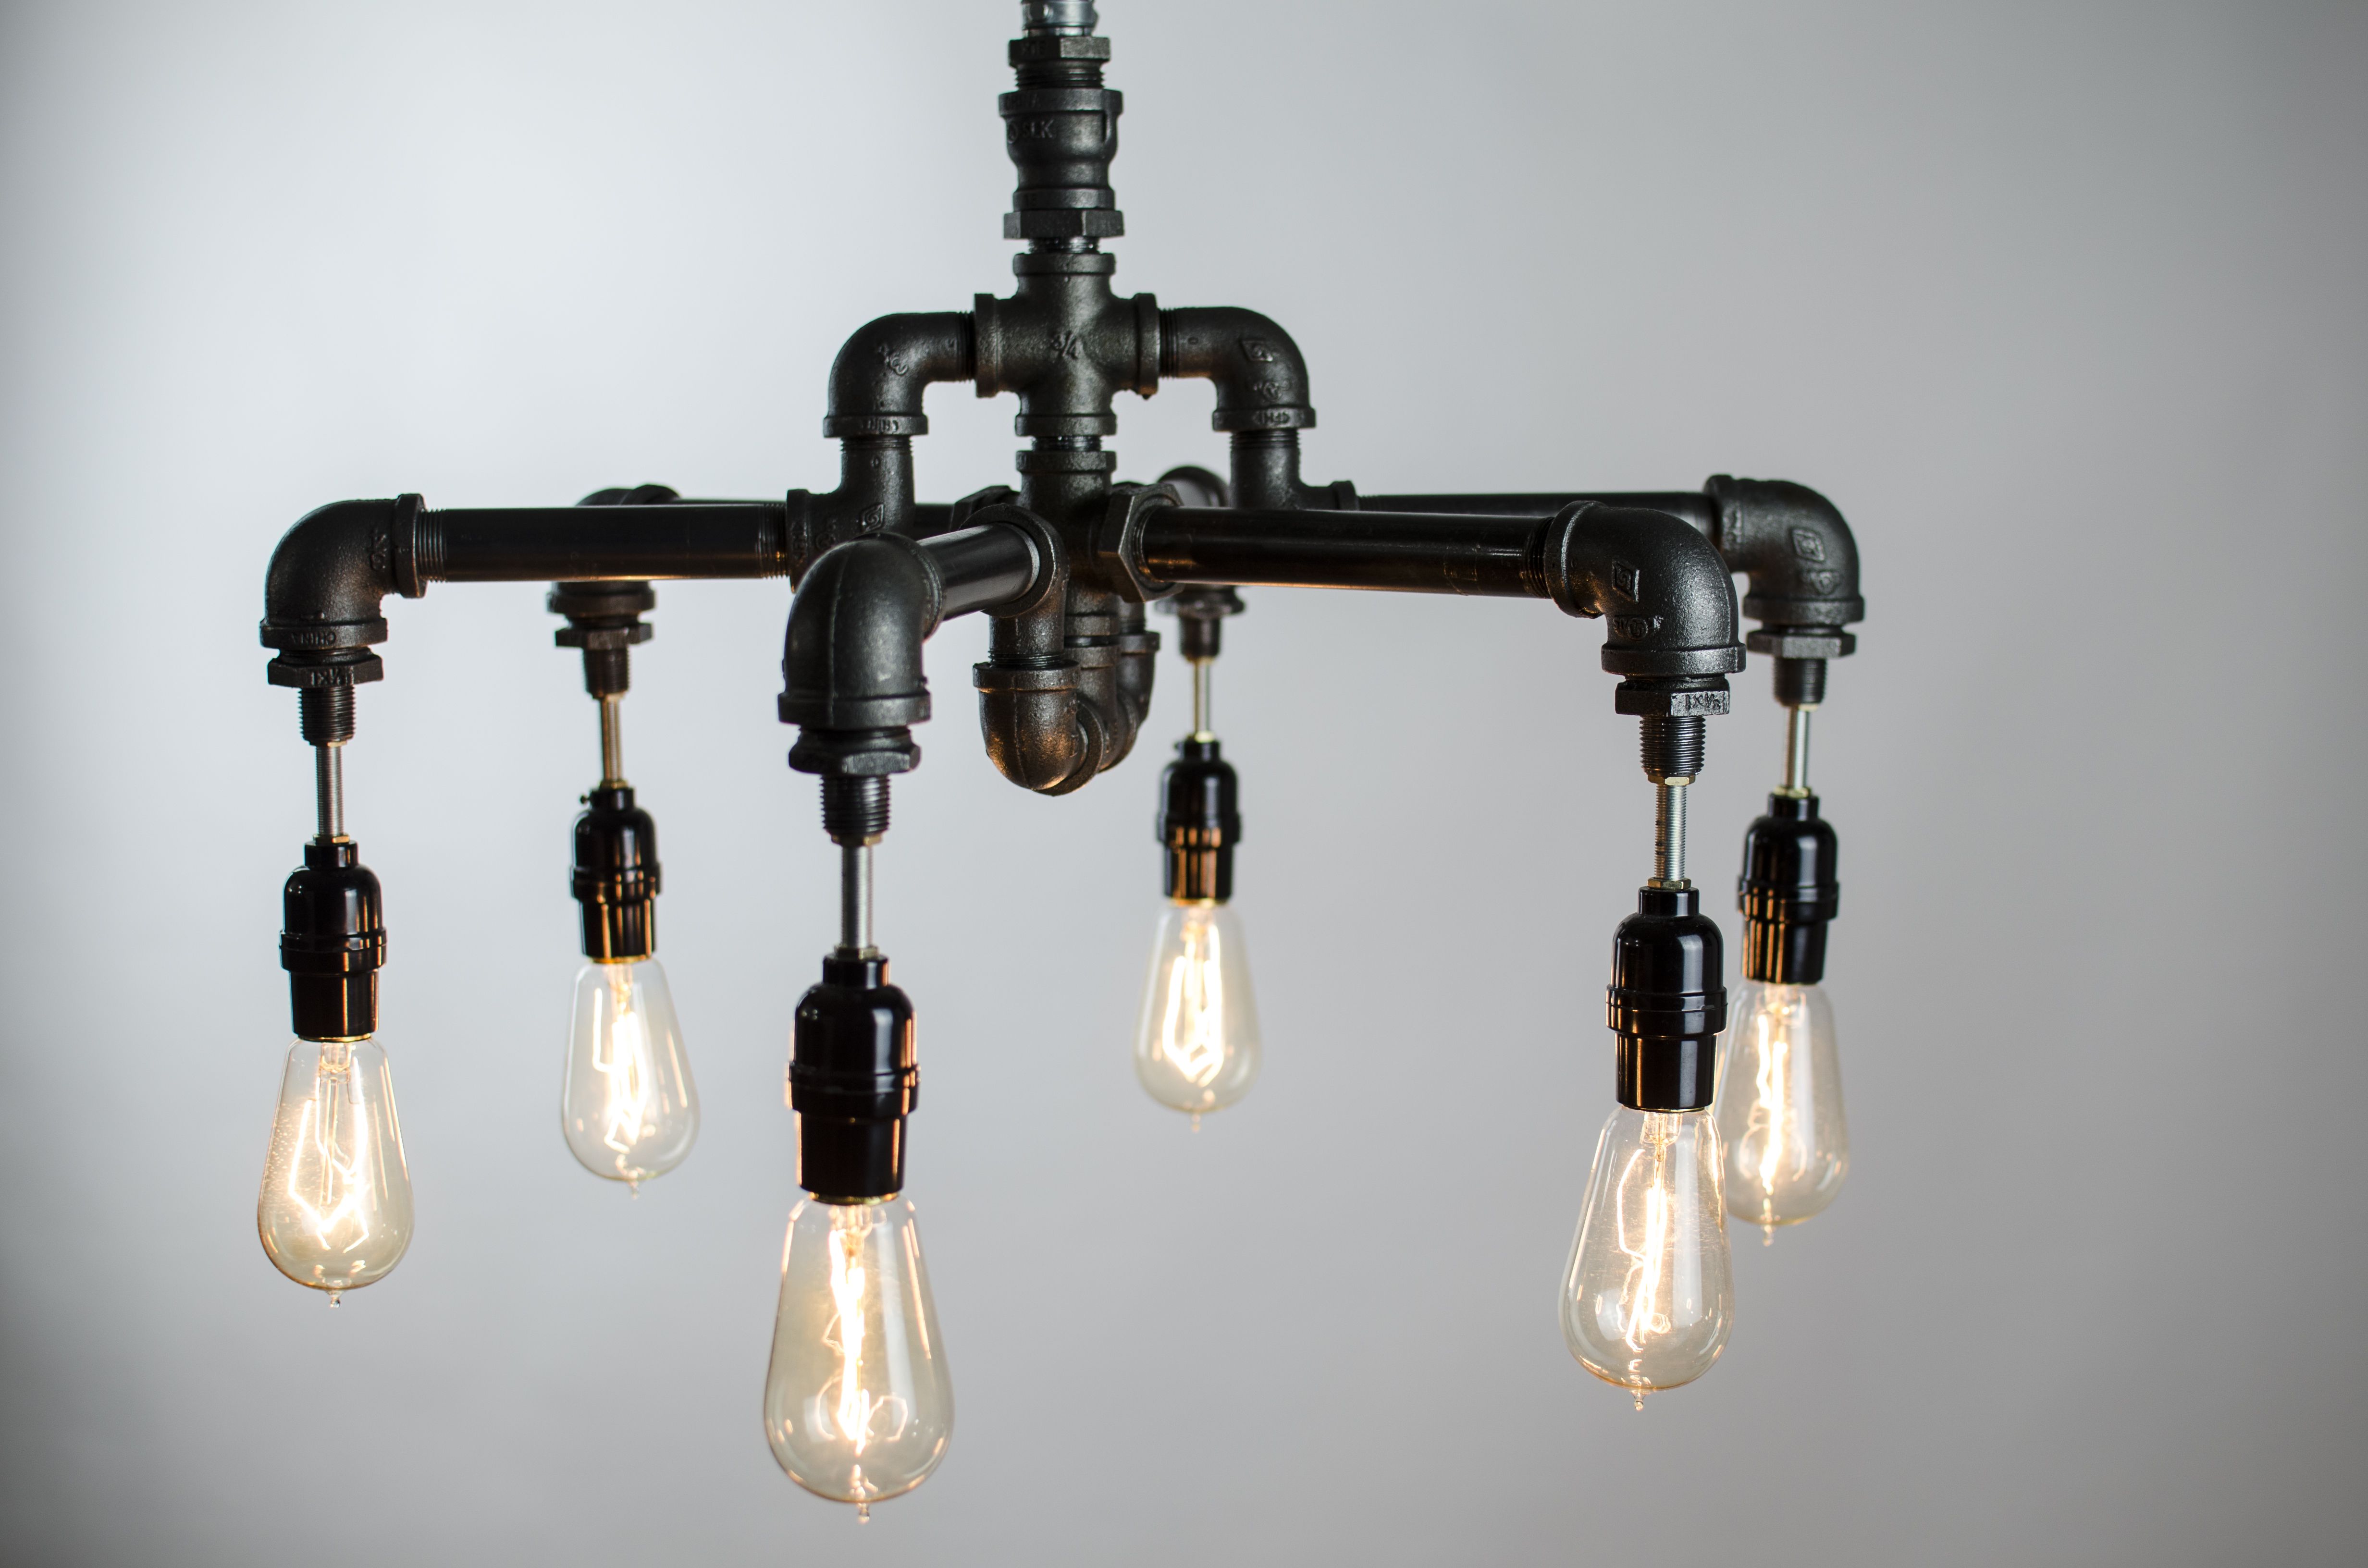 Buy Handmade 6 Edison Bulbs Industrial Lighting Chandelier Made To